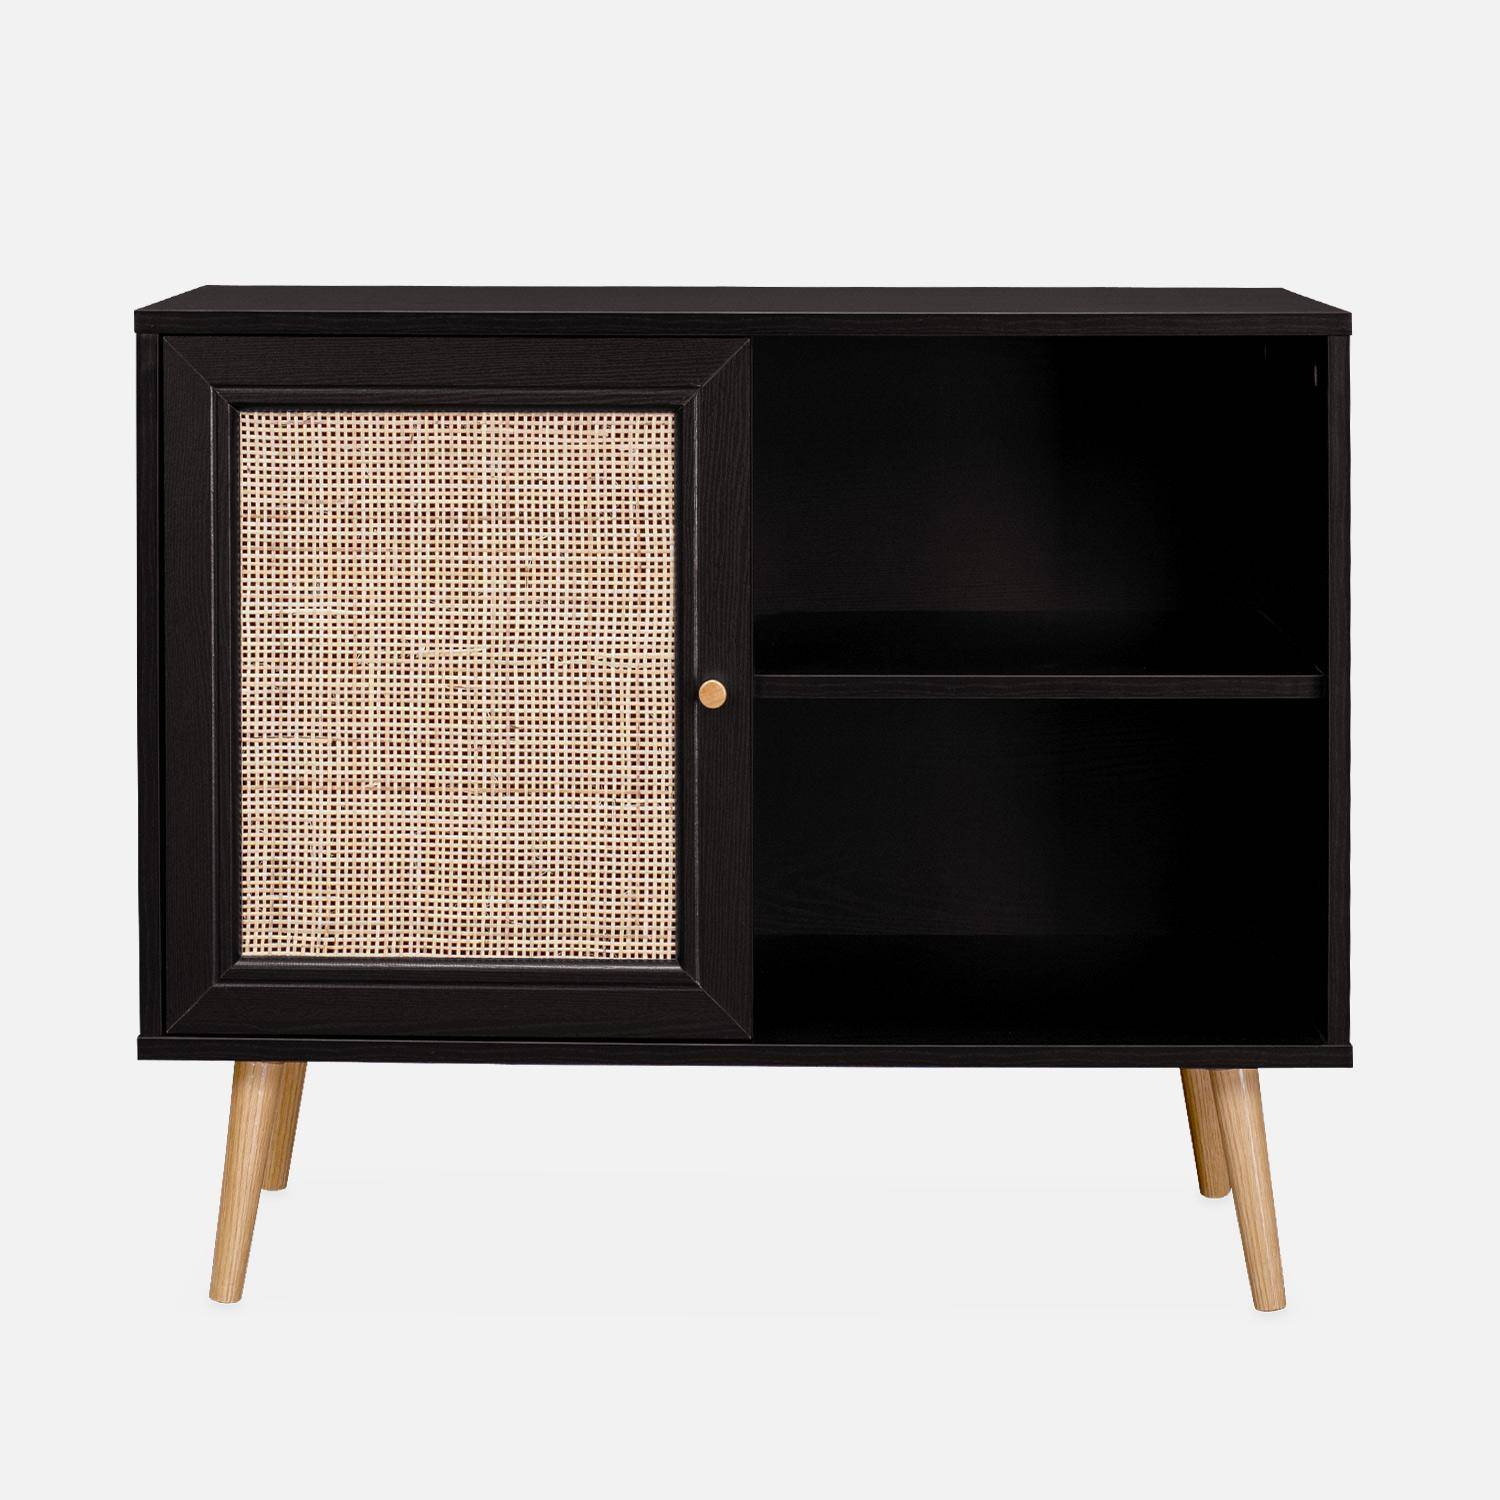 Wooden and cane rattan detail storage cabinet with 2 shelves, 1 cupboard, Scandi-style legs, 80x39x65.8cm - Boheme - Black,sweeek,Photo3